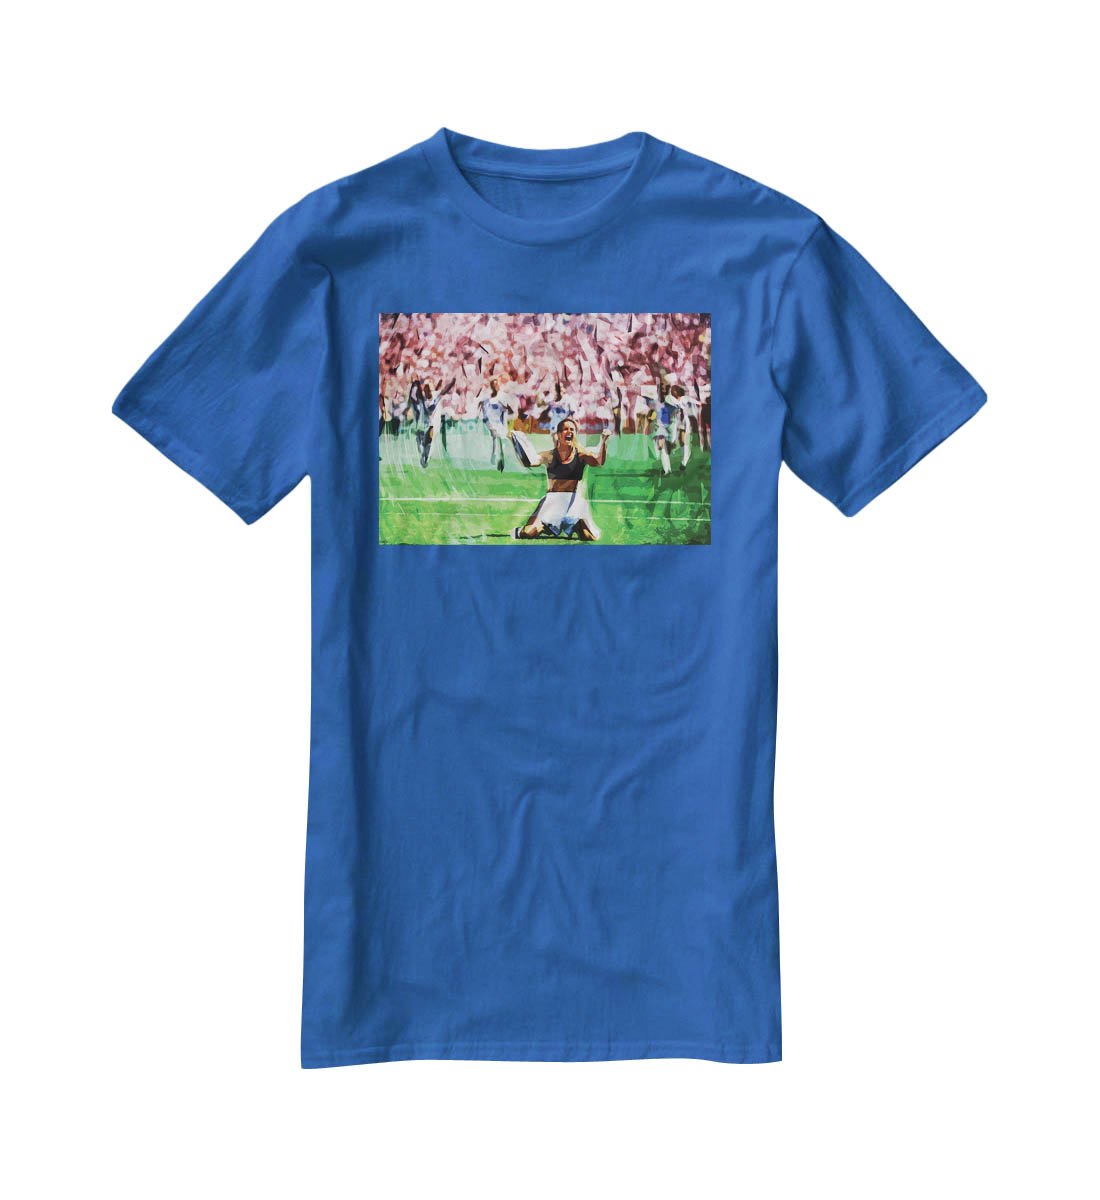 Brandi Chastain Celebrates USA Soccer 1999 T-Shirt - Canvas Art Rocks - 2